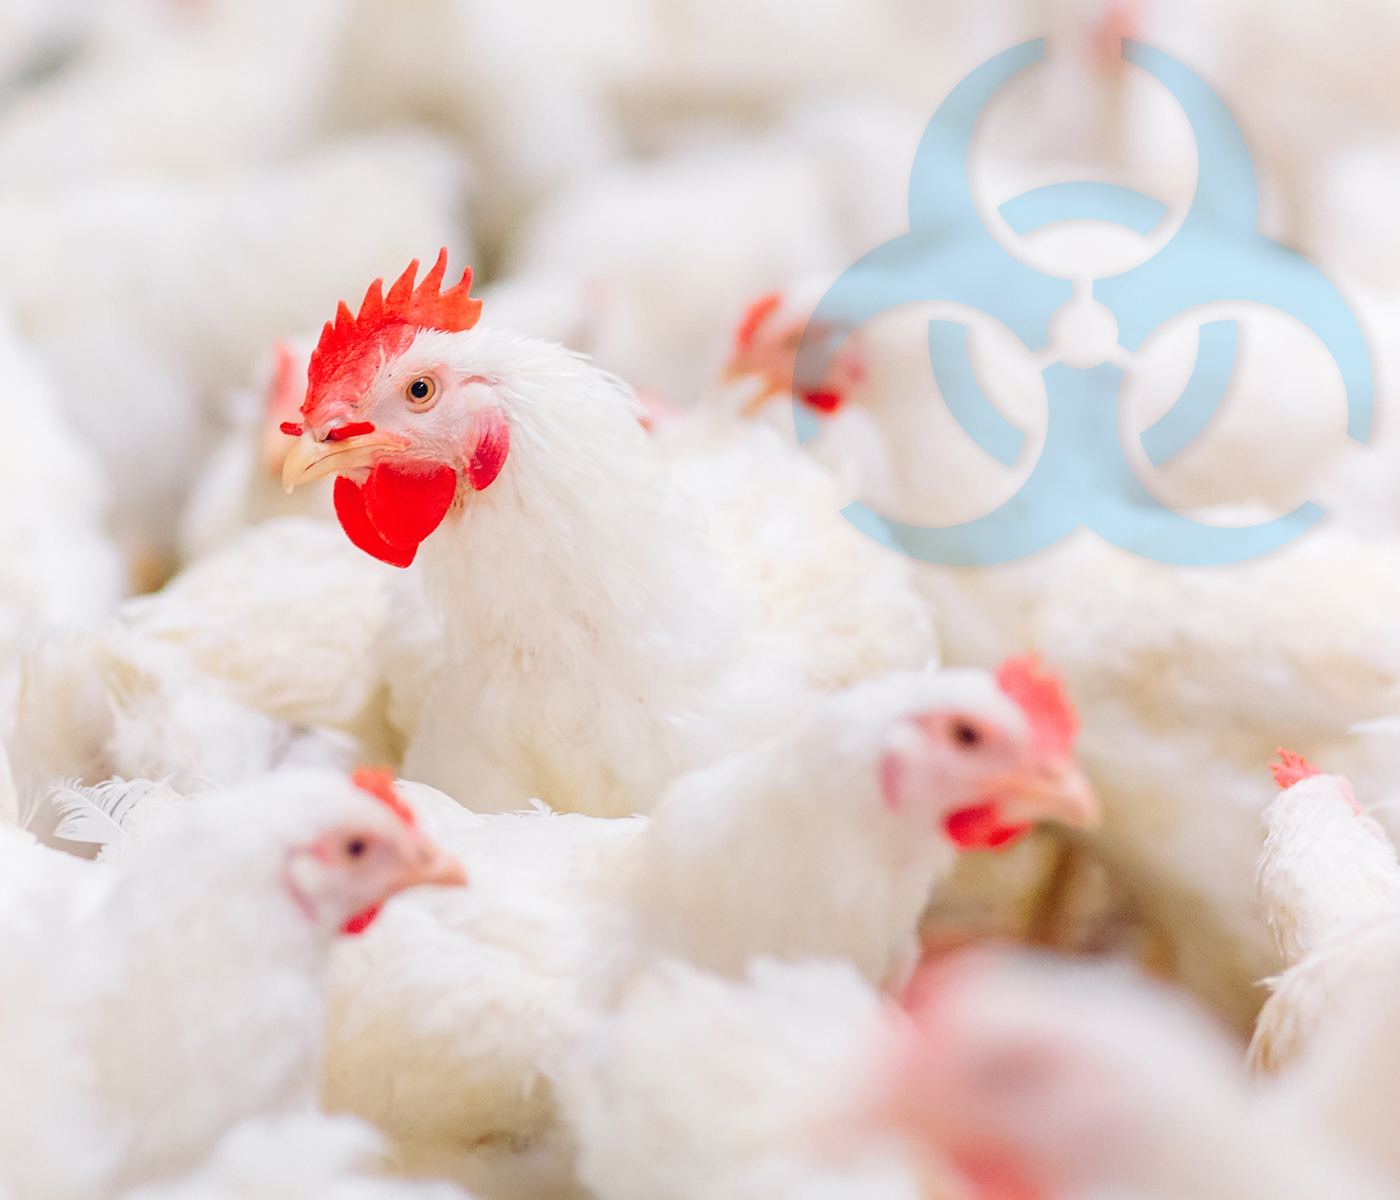 Control integral de la bioseguridad en avicultura